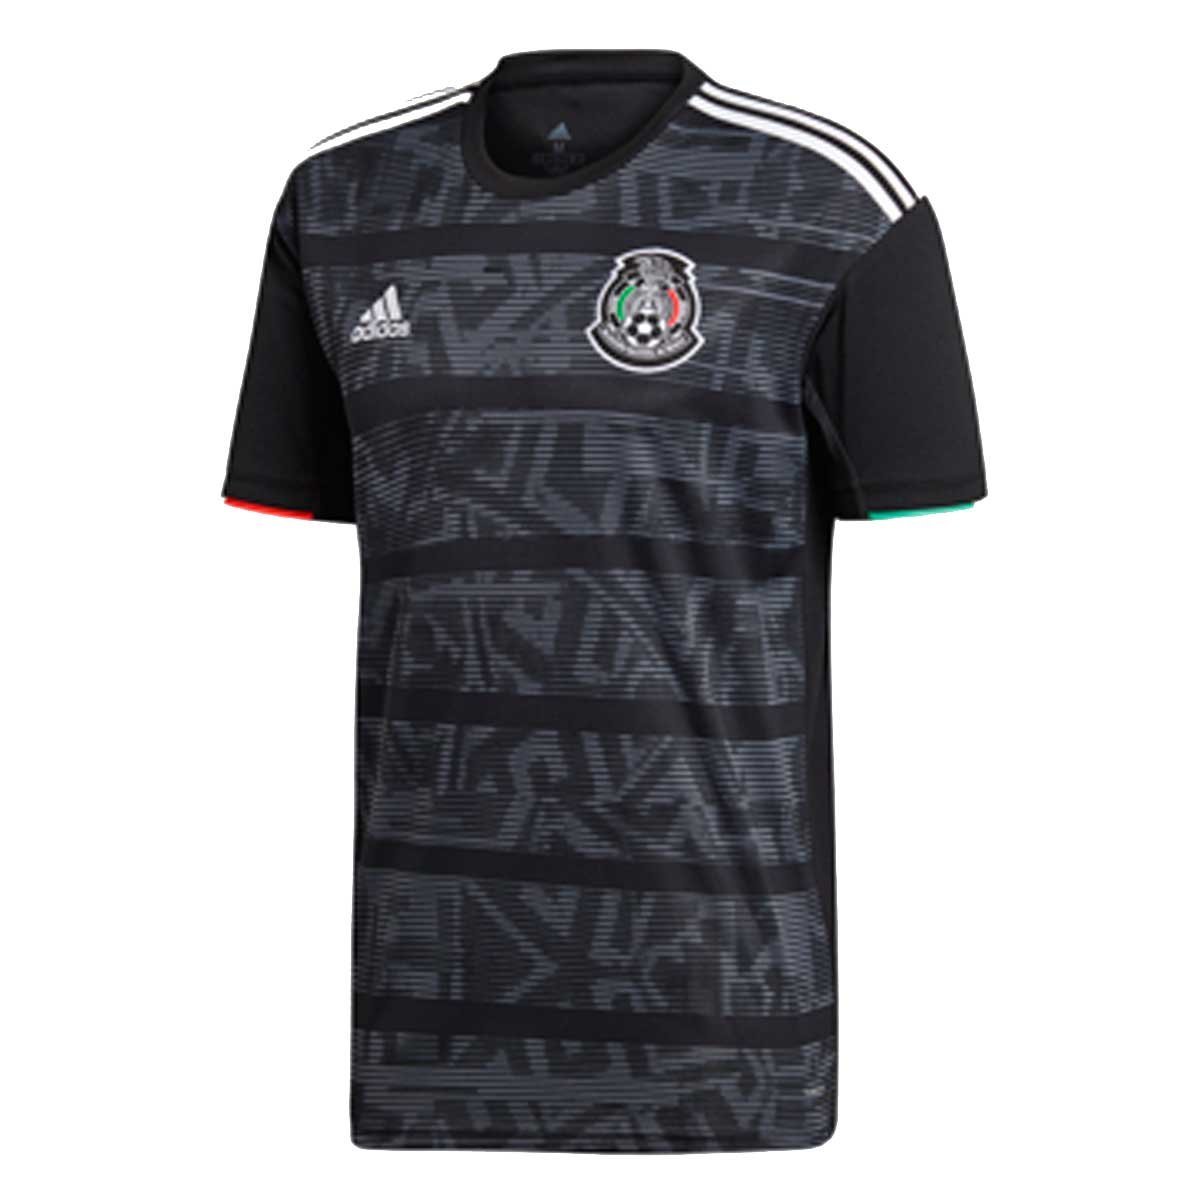 Jersey México Jugador 19  Adidas - Caballero